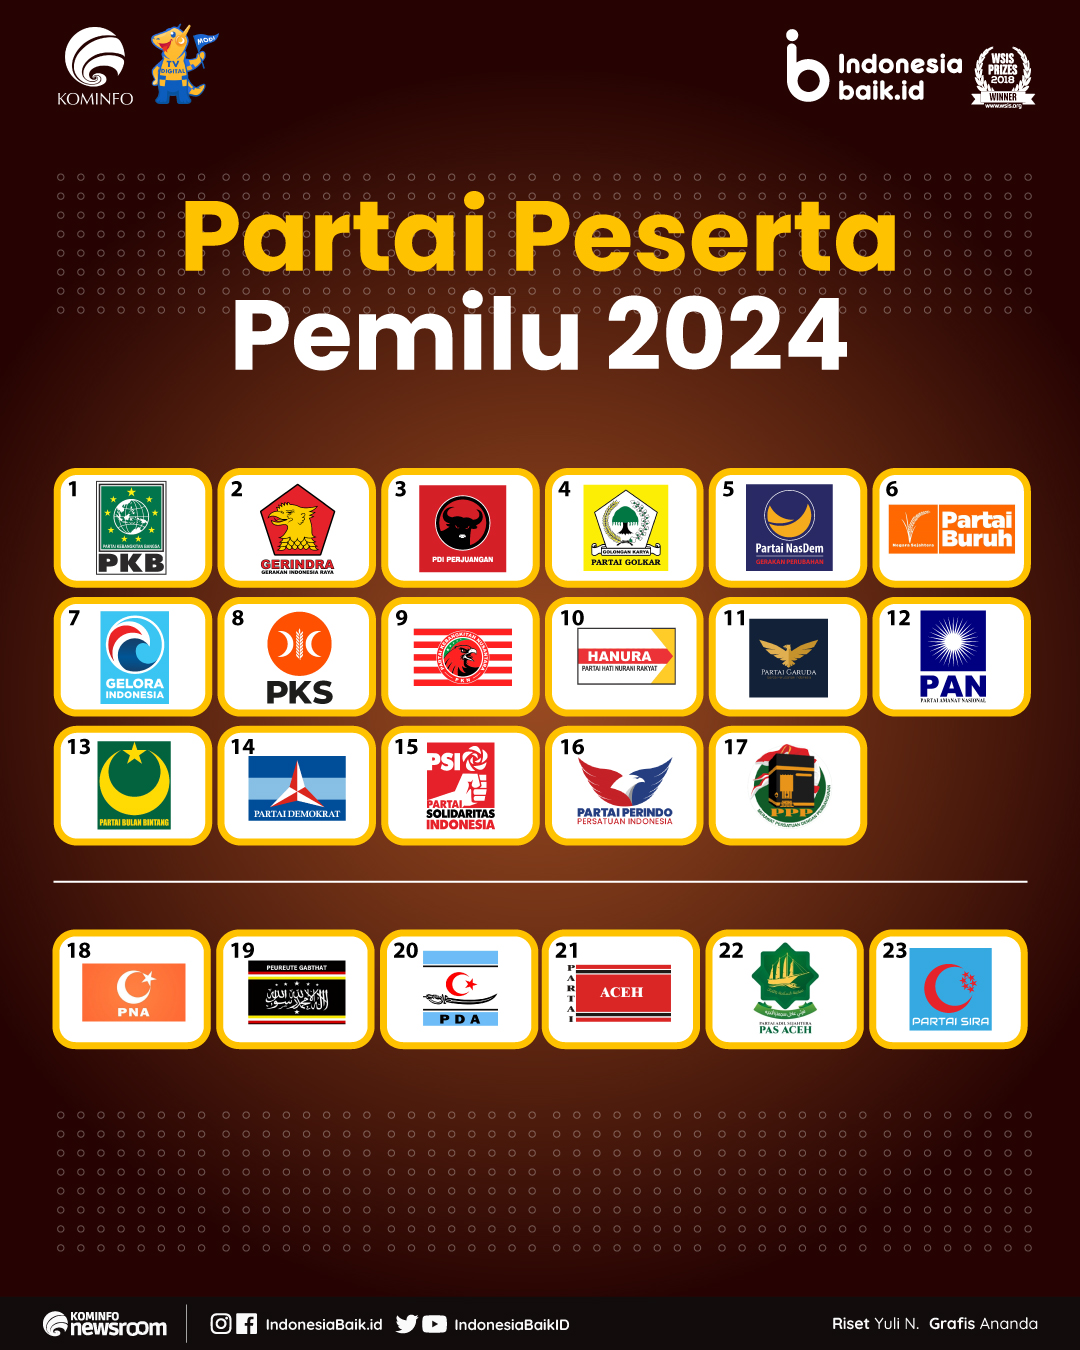 Partai Peserta Pemilu 2024 Indonesia Baik